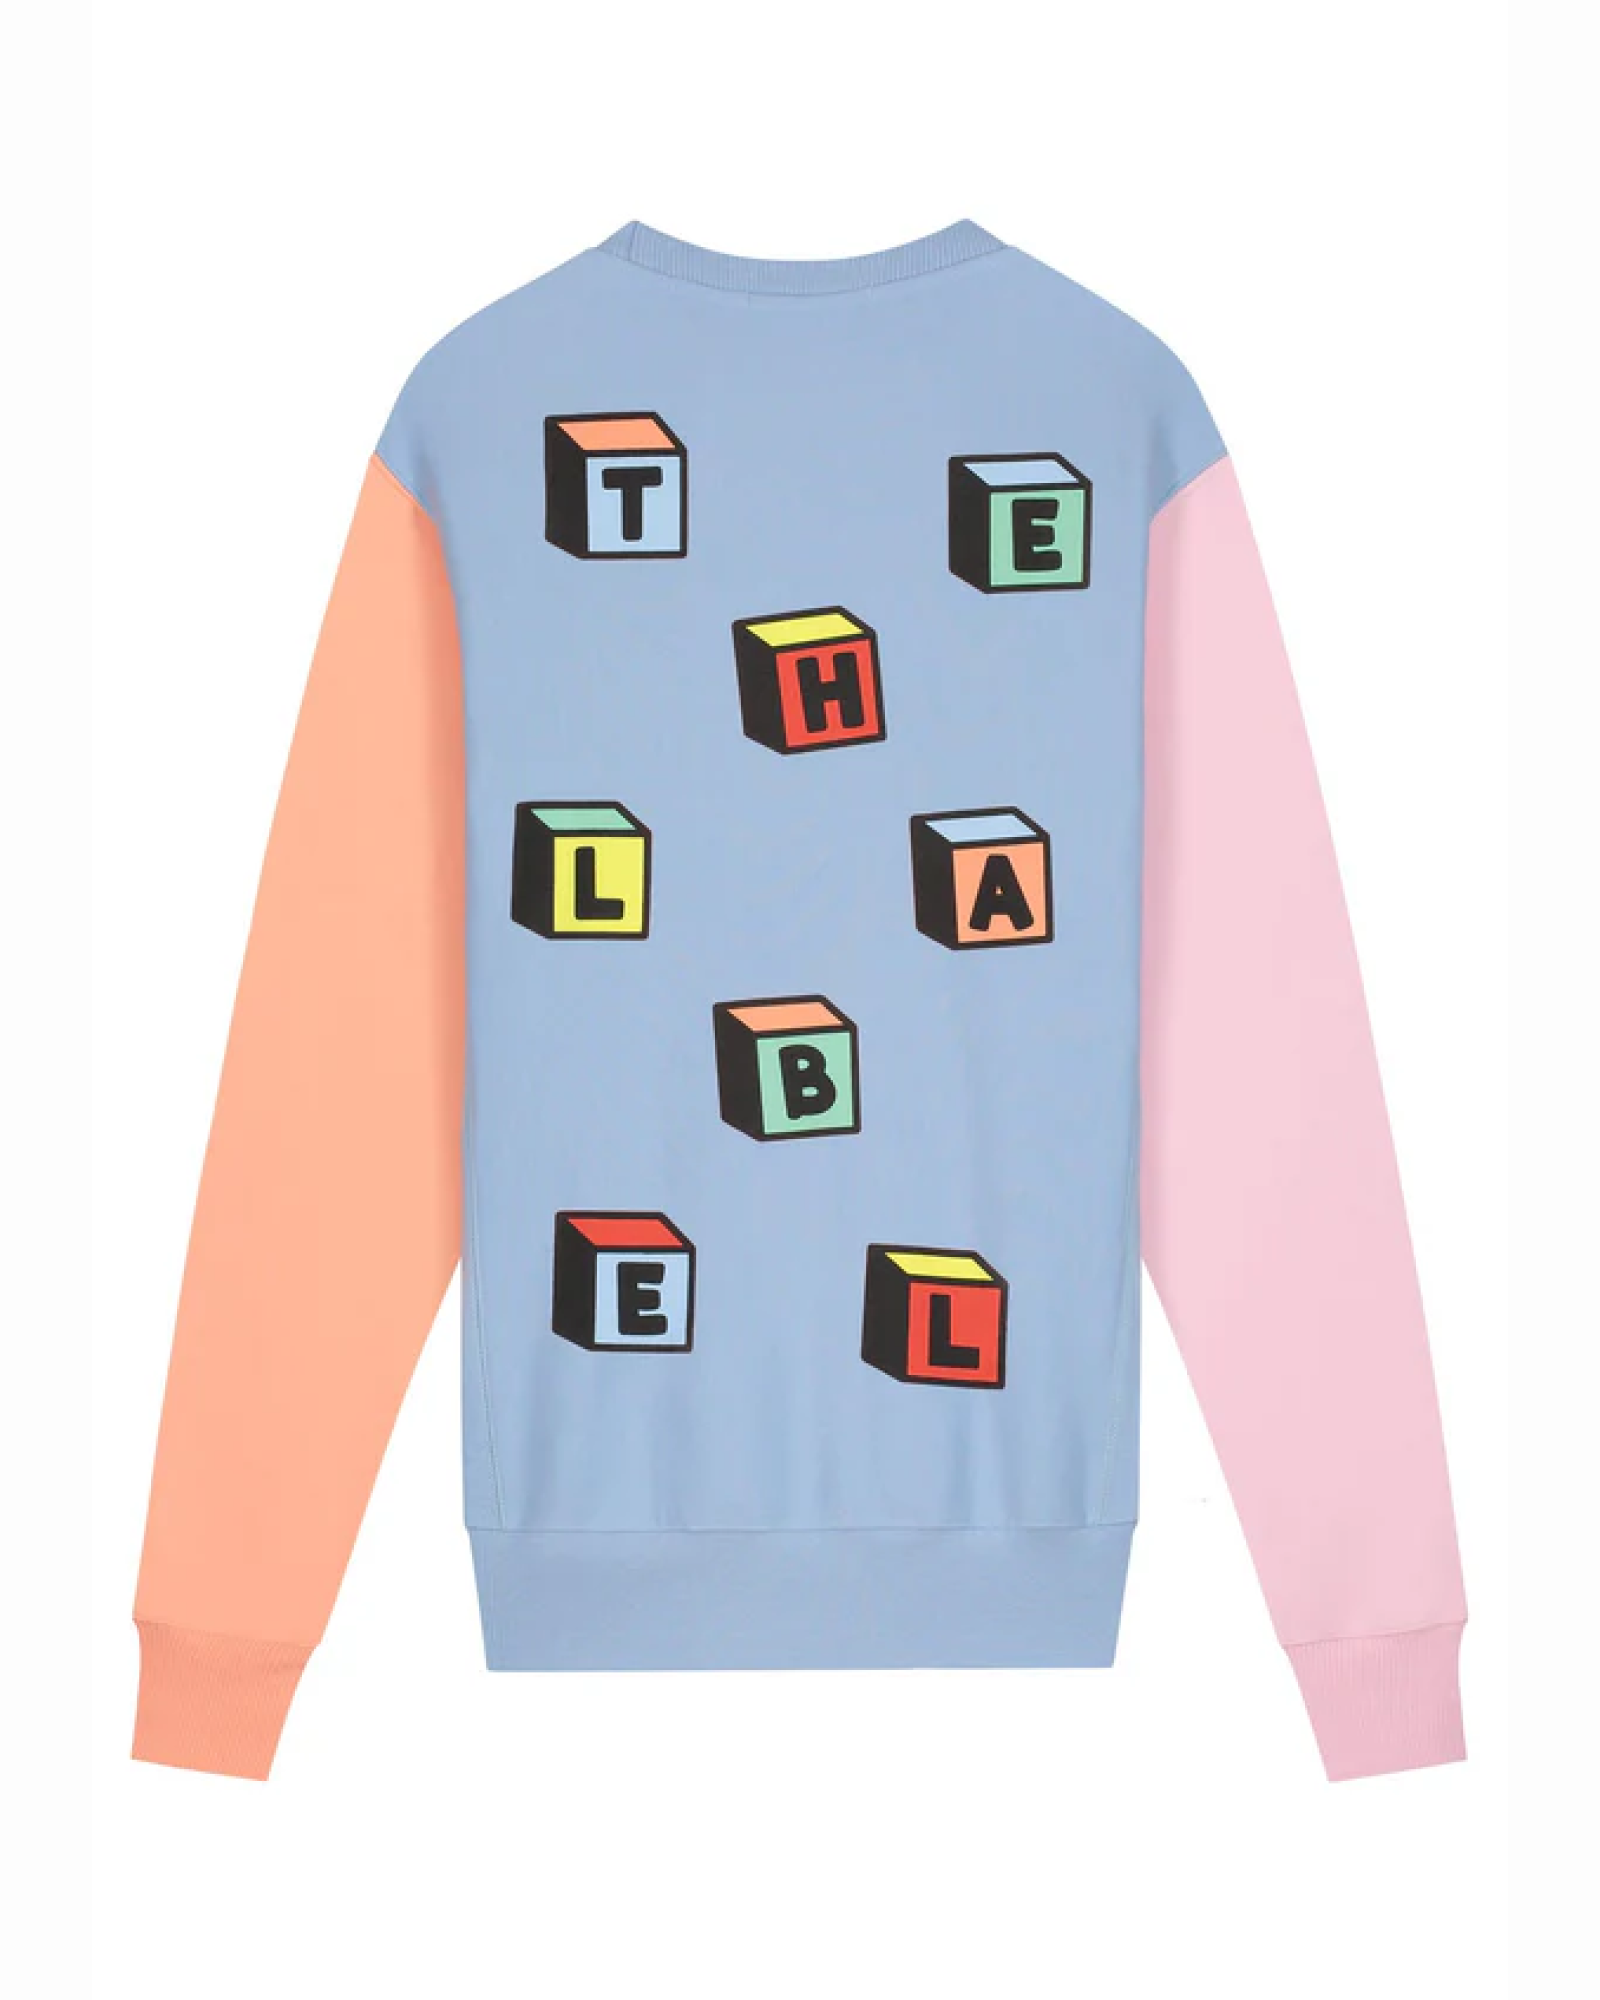 Toy Block Sweater